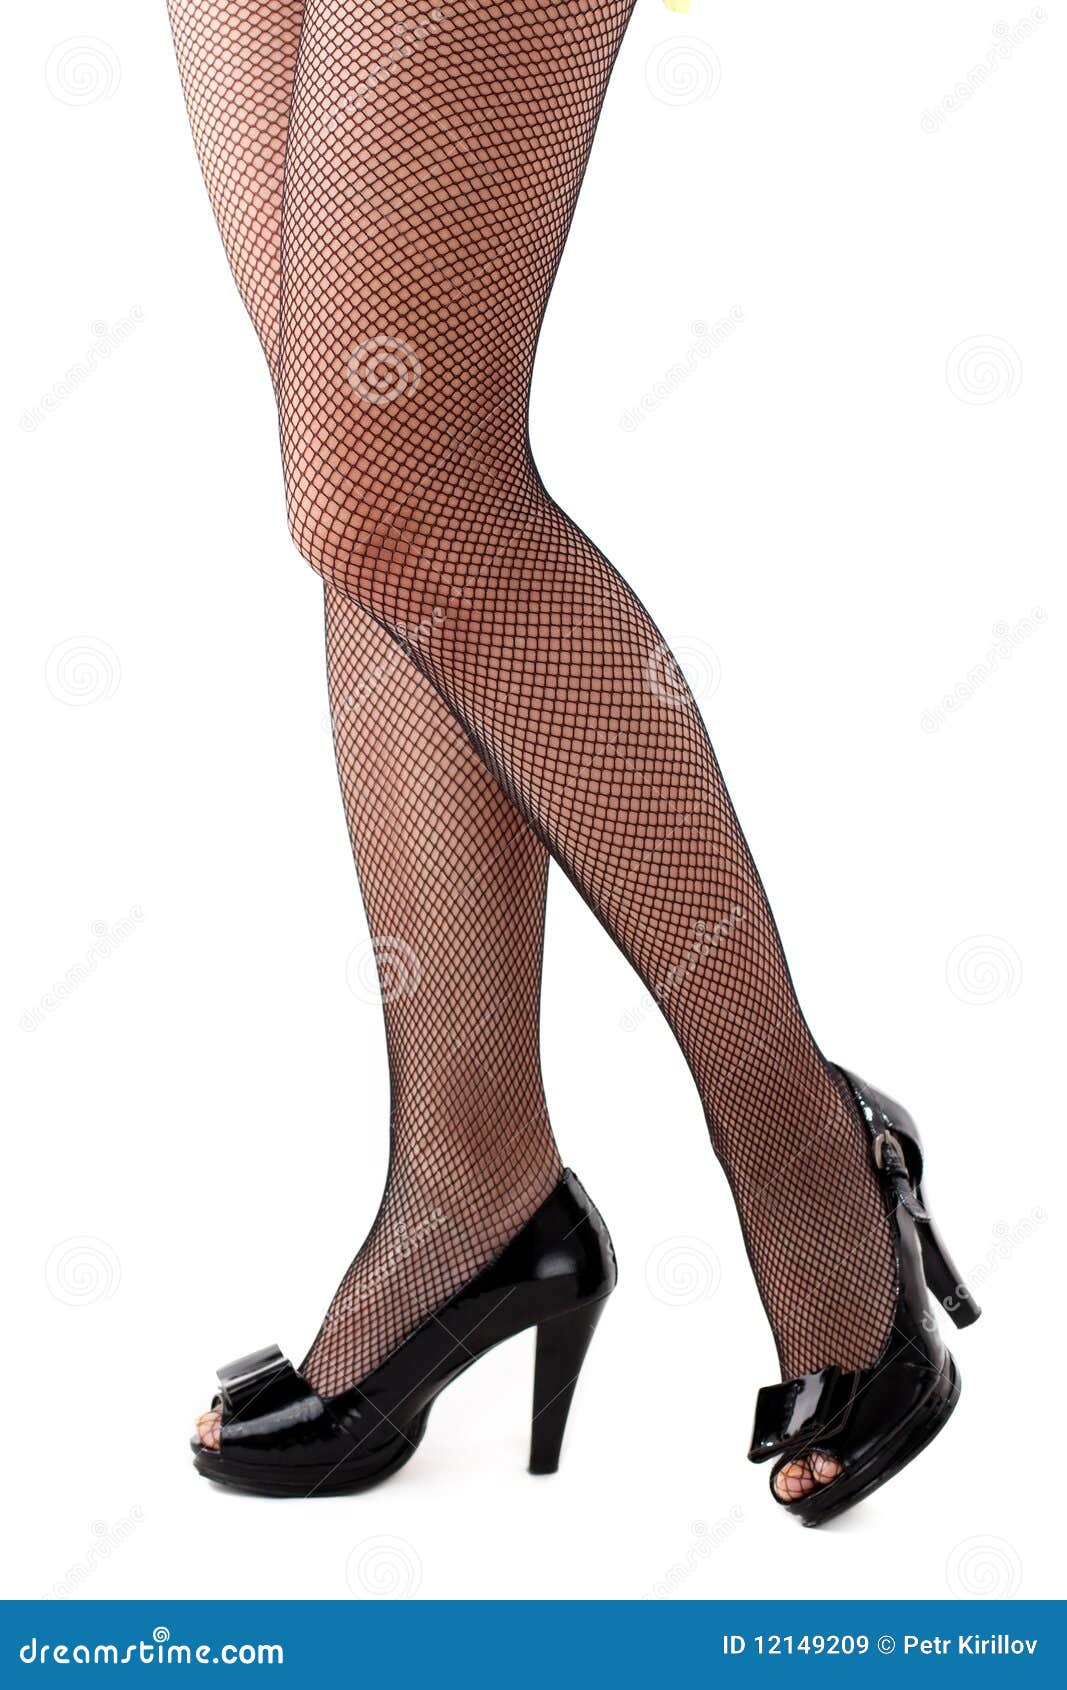 Beautiful Woman Legs in Stockings Stock Image - Image of heels, fashion ...